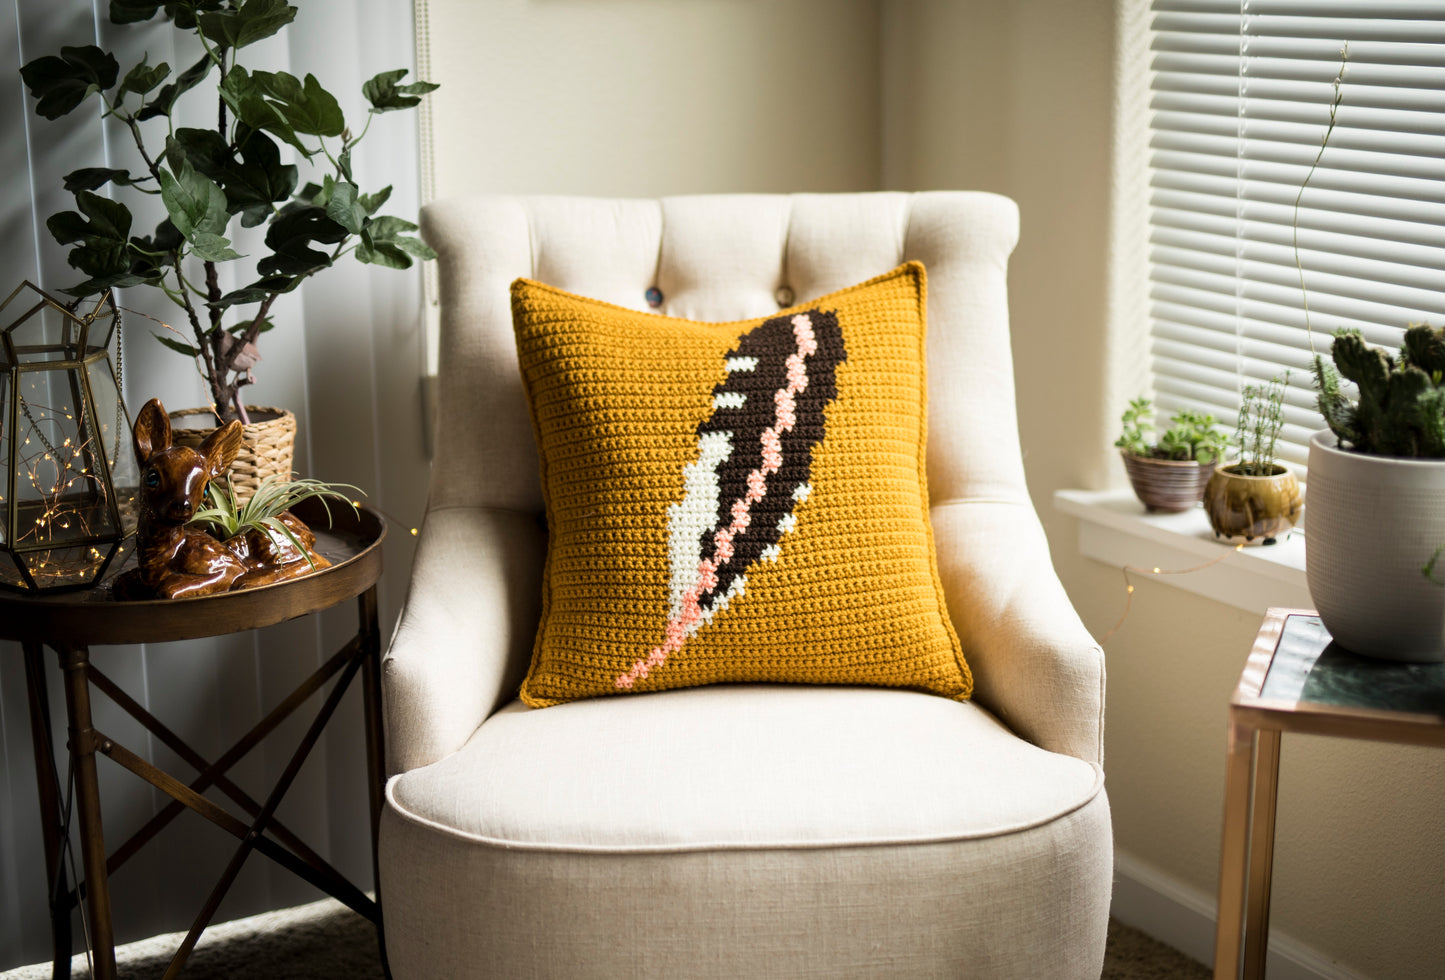 Crochet Pattern: The Flicker Pillow